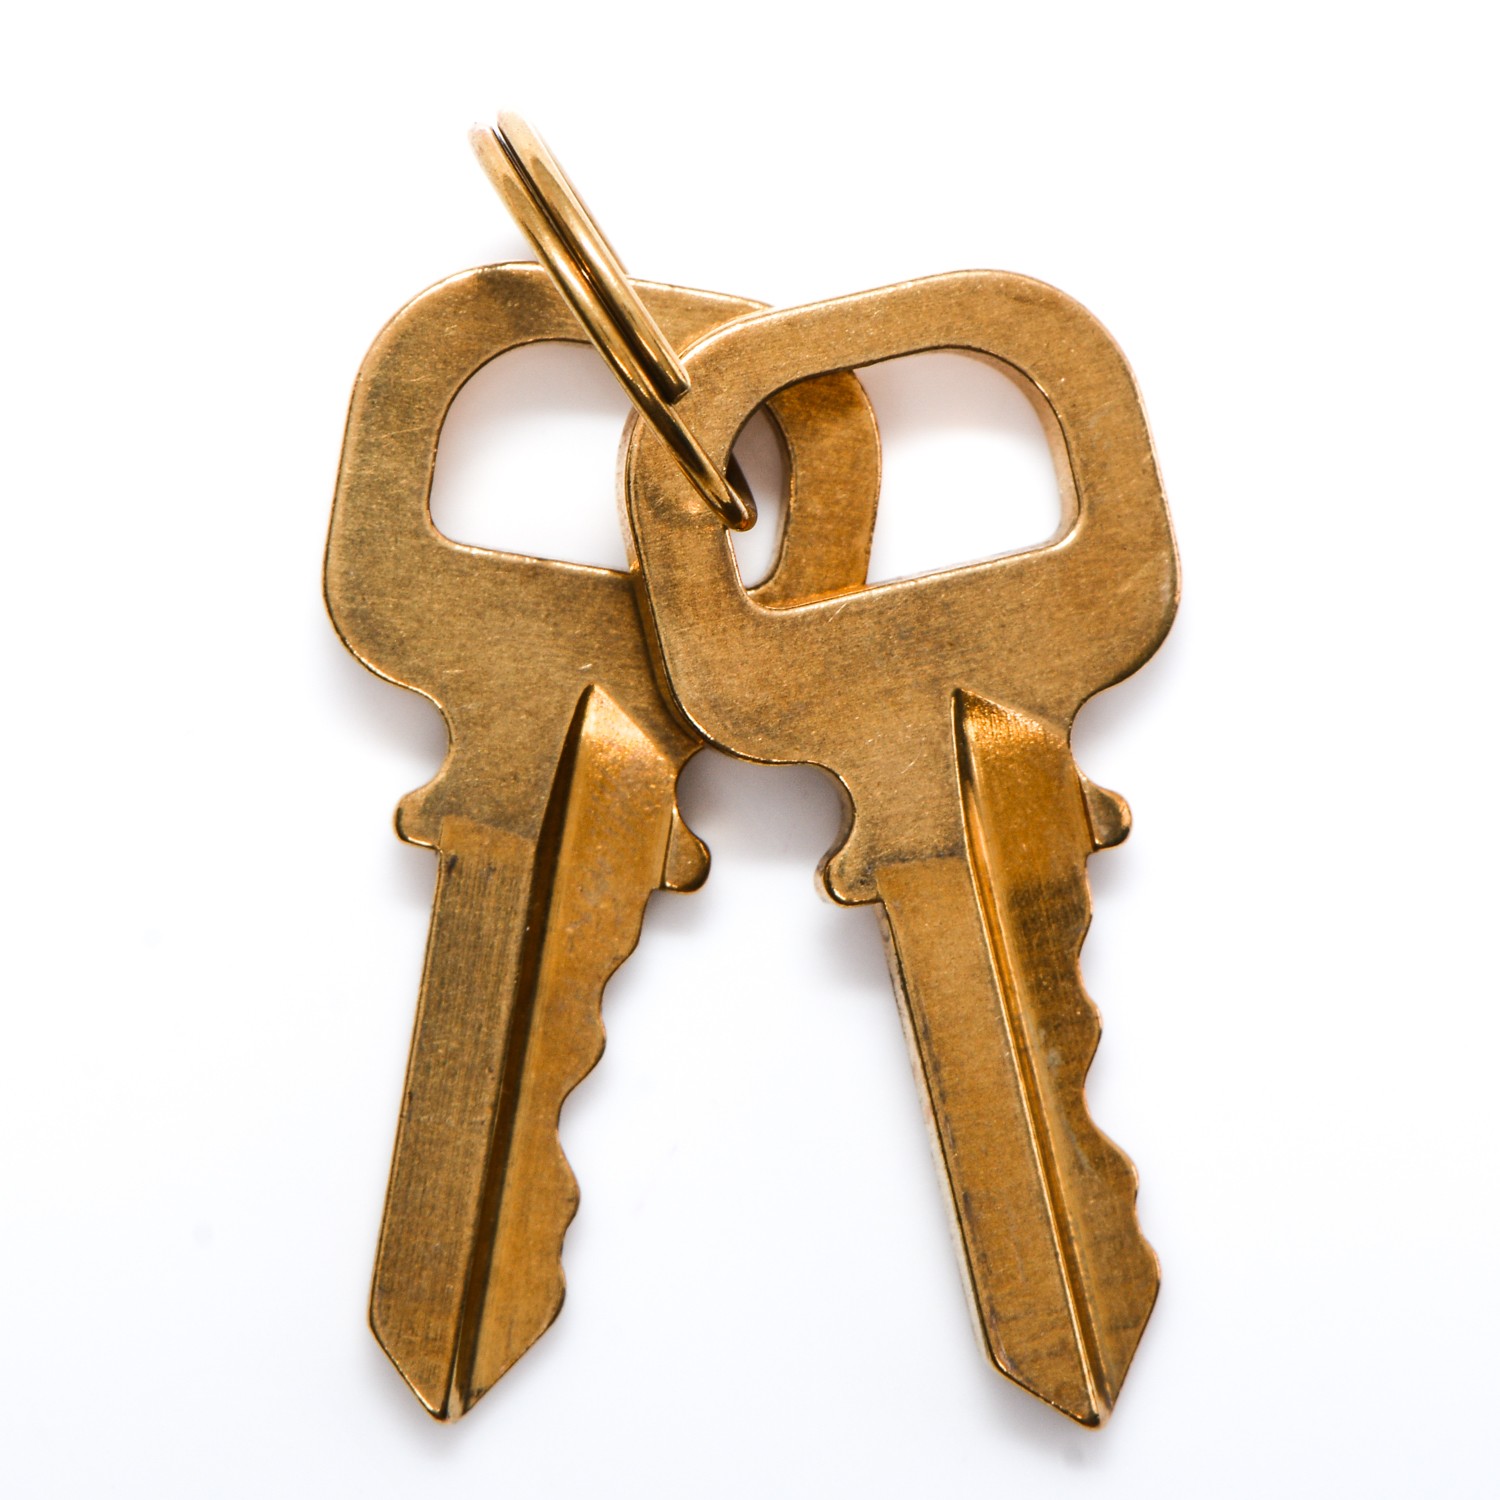 LOUIS VUITTON Brass Lock and 2 Keys Set #302 194072